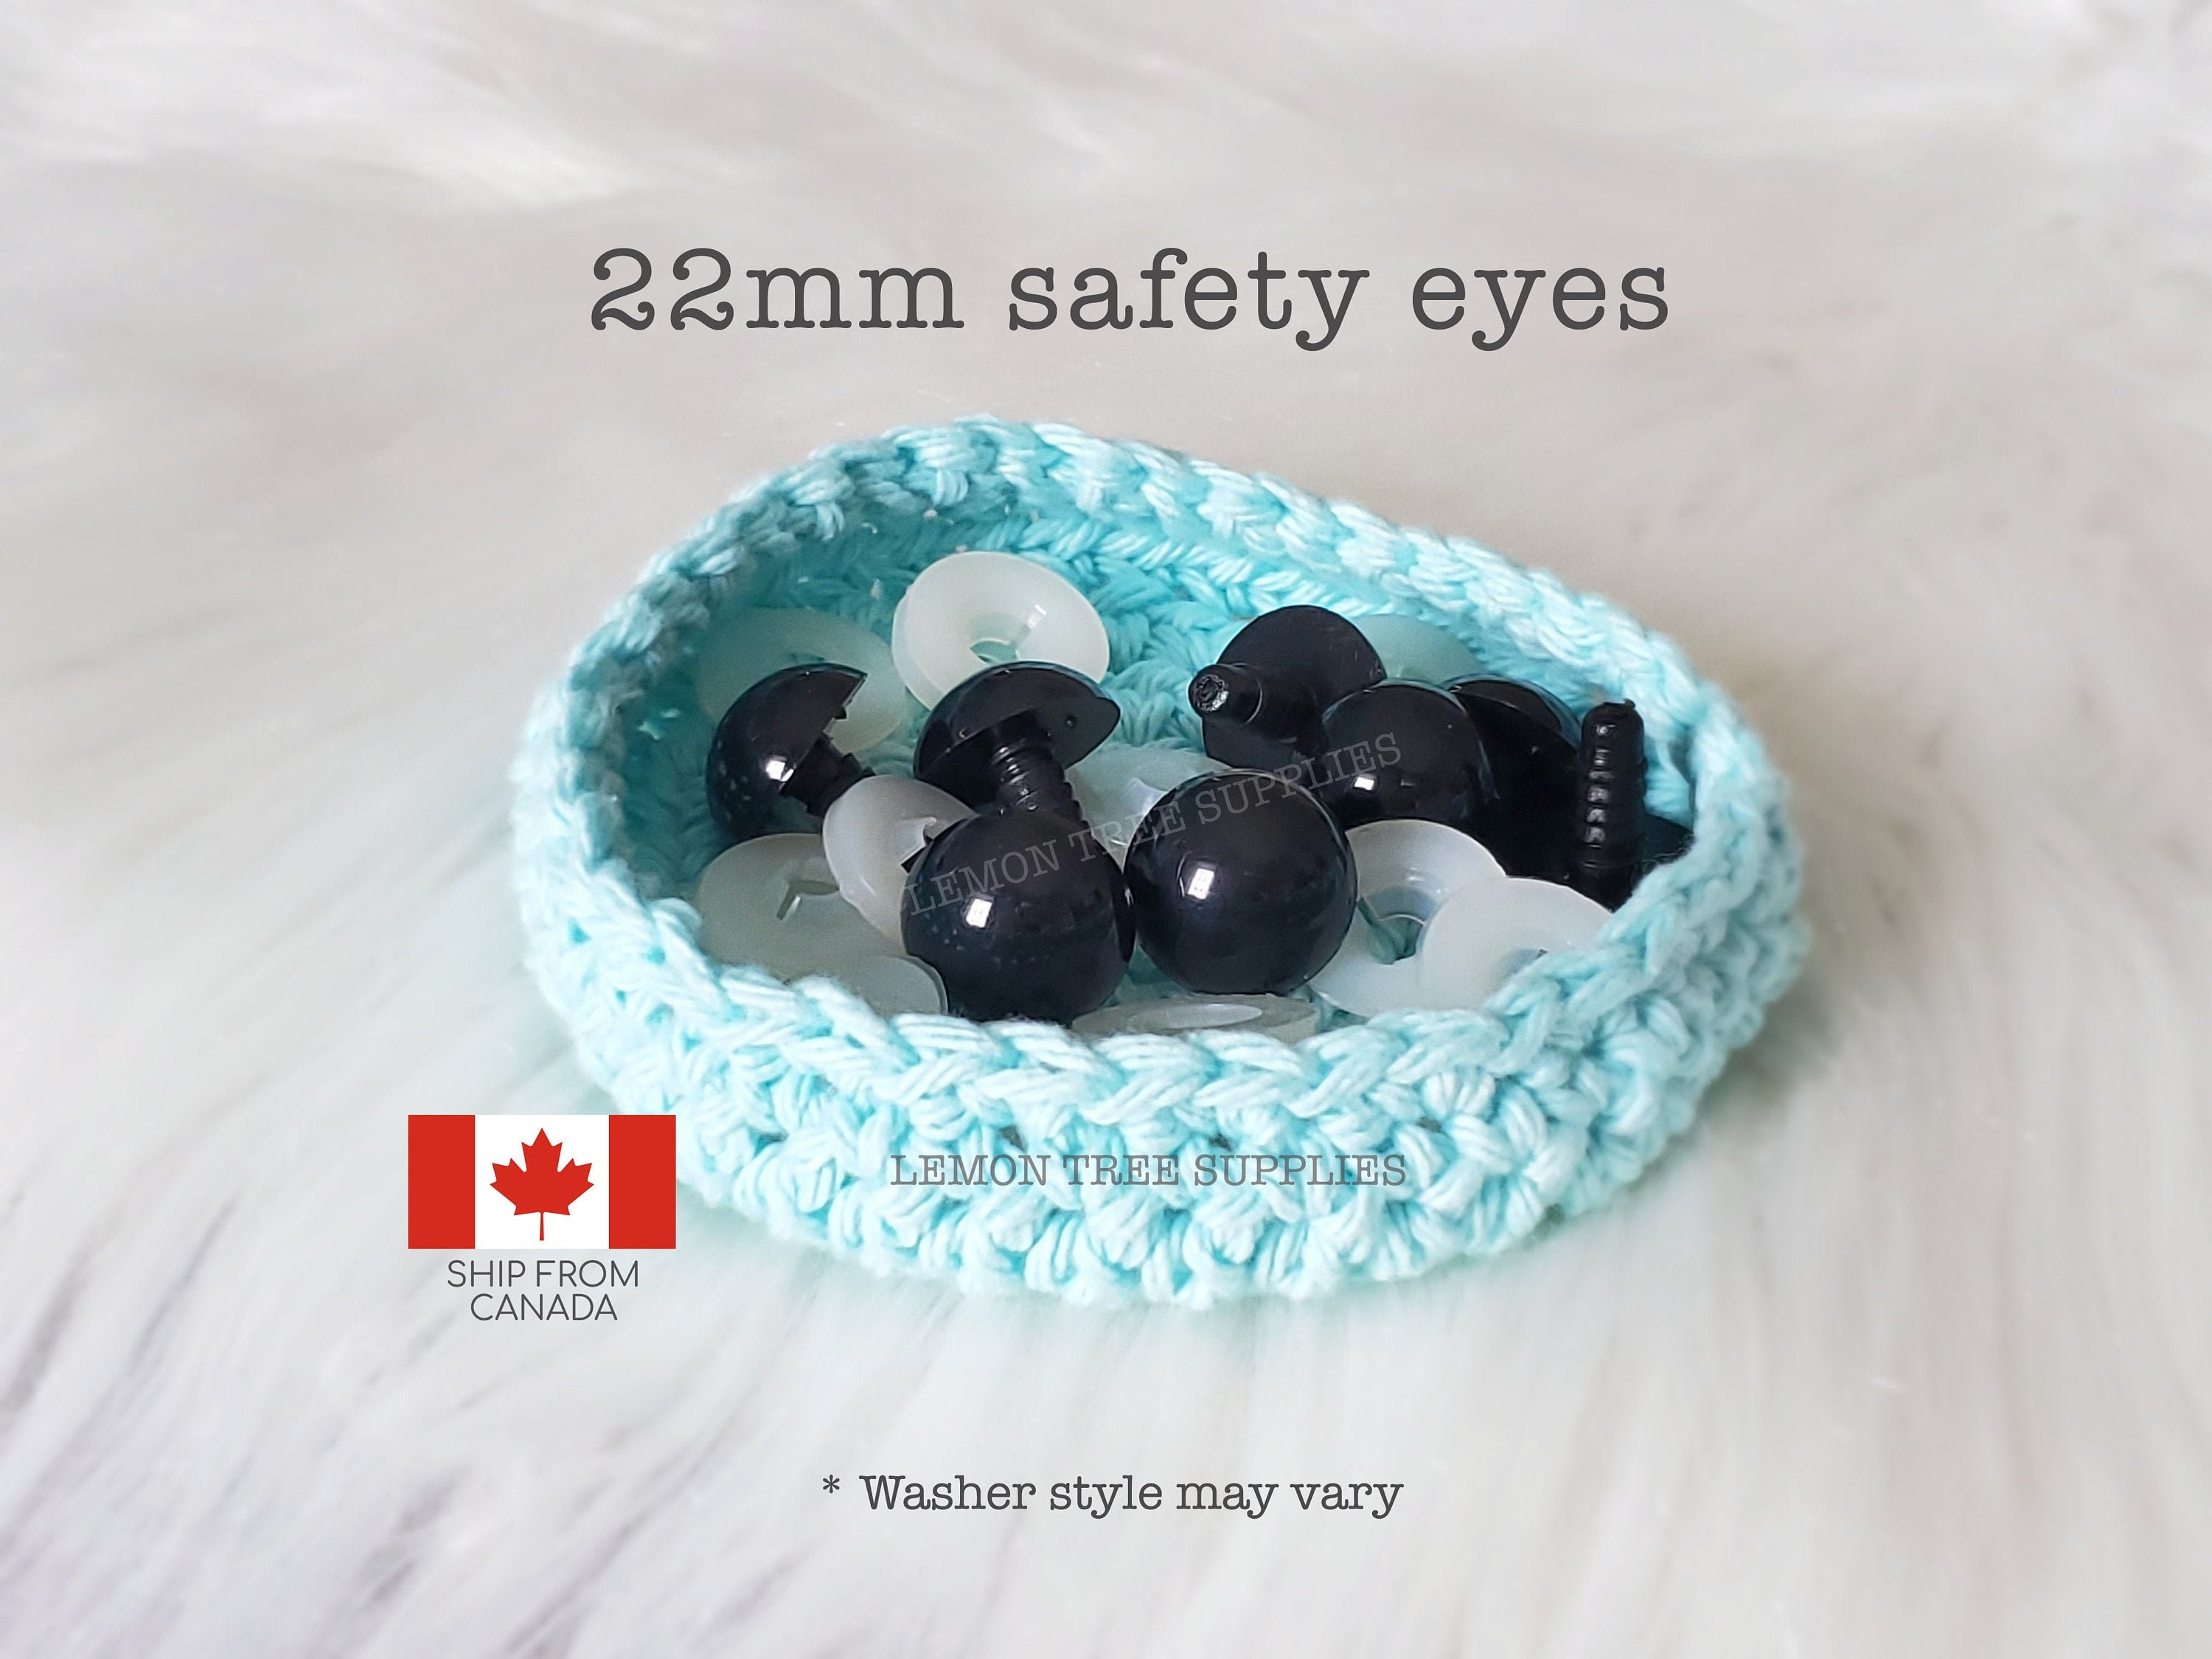 22mm Black Safety Eyes, Amigurumi Eyes for Stuffed Animals and